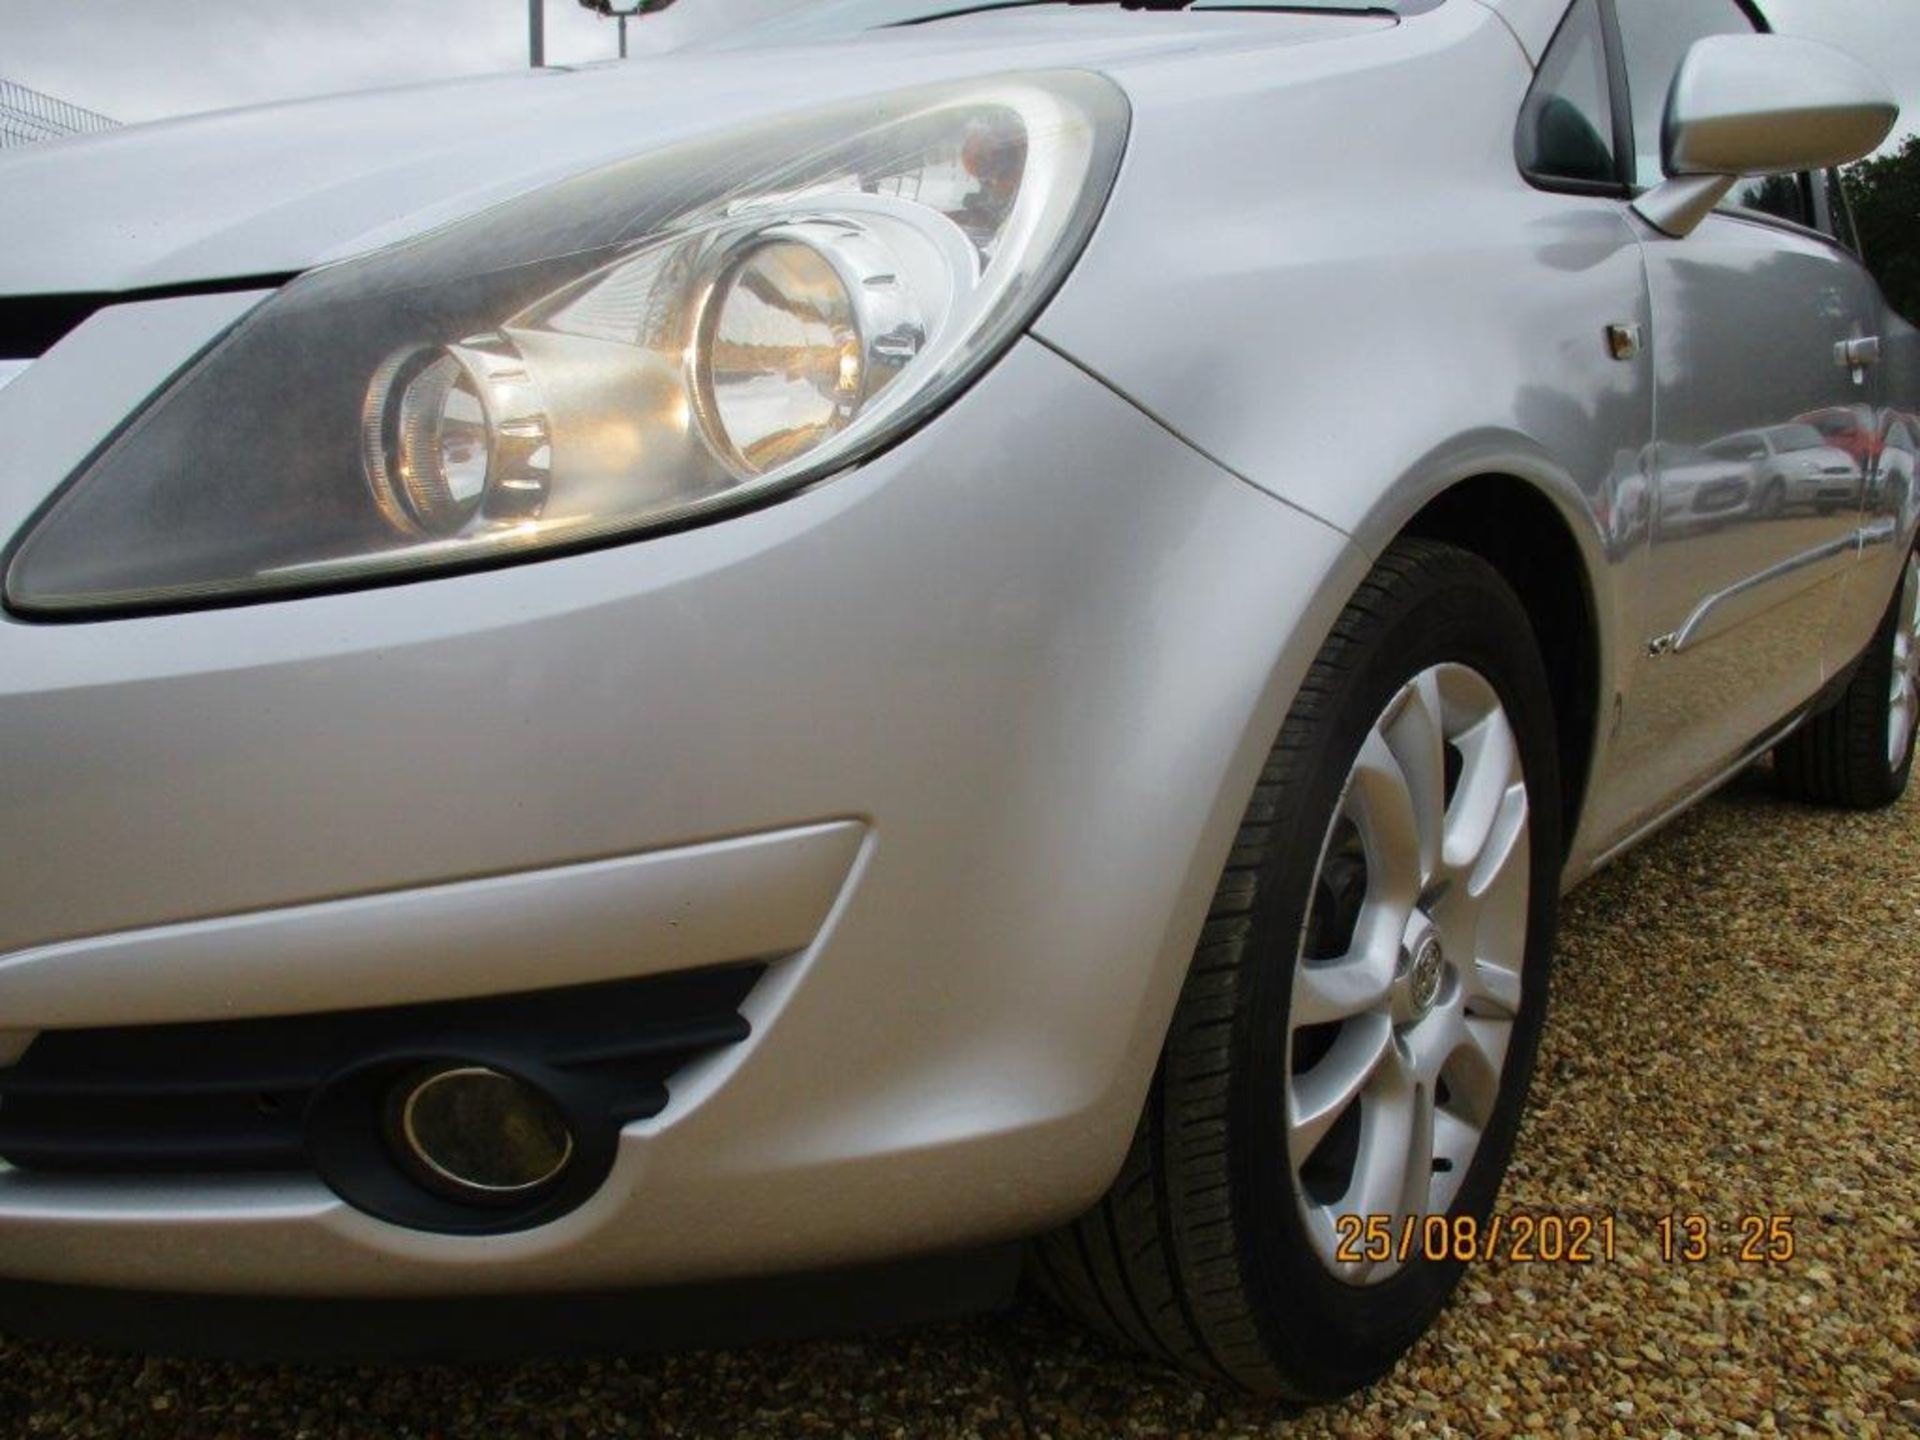 07 57 Vauxhall Corsa SXI 3dr - Image 3 of 17